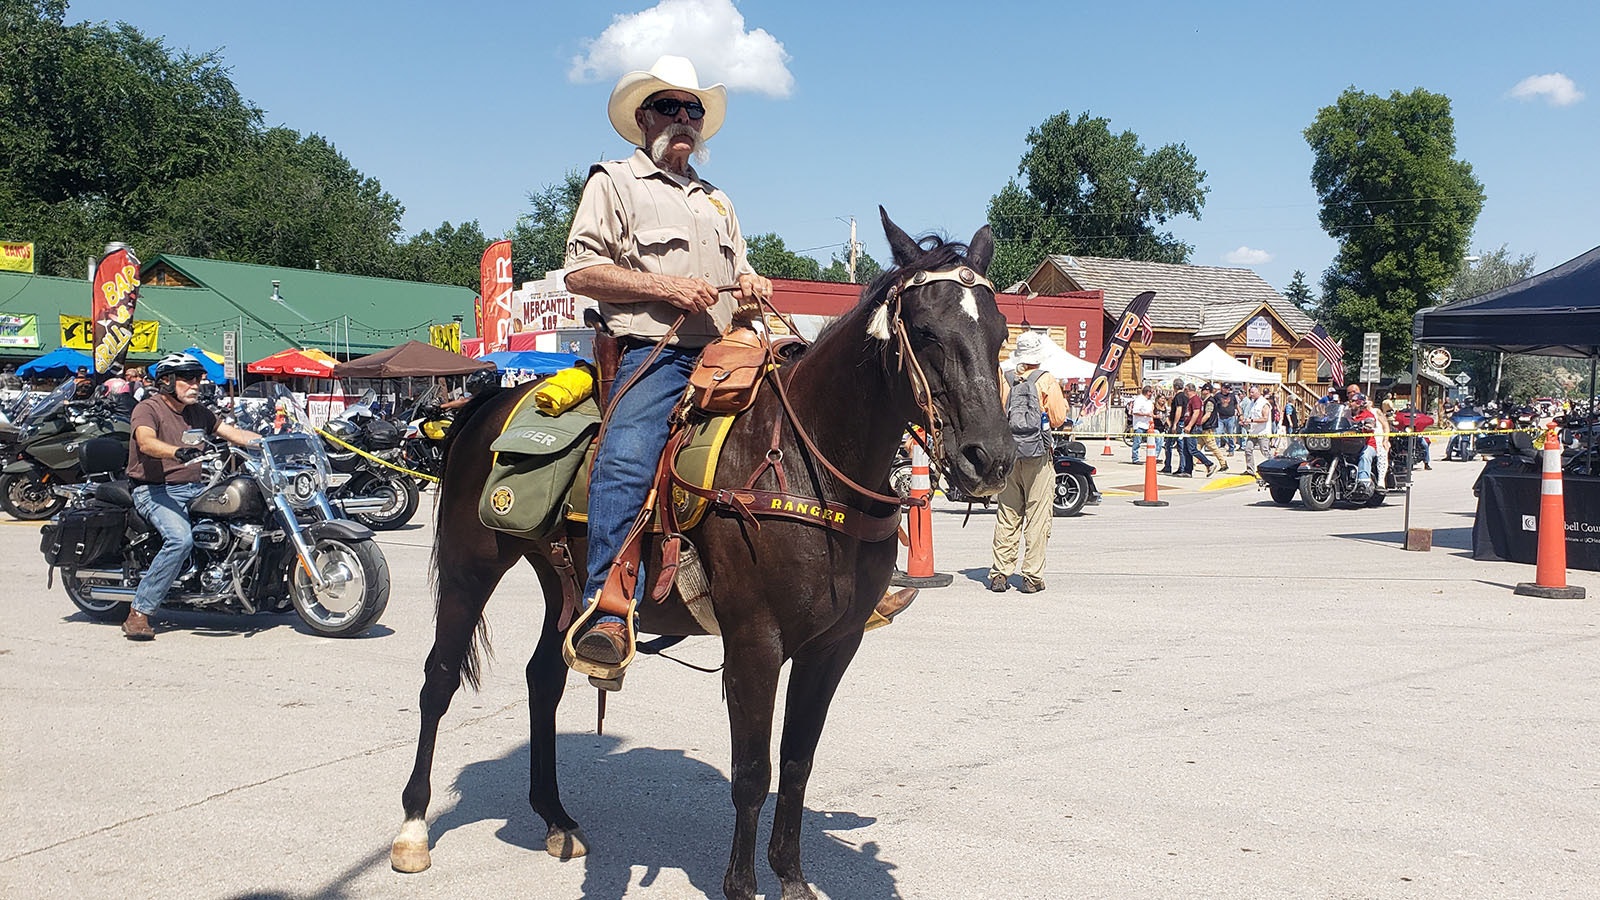 Some of the volunteer law enforcement for the Ham-N-Jam were park rangers on horseback.